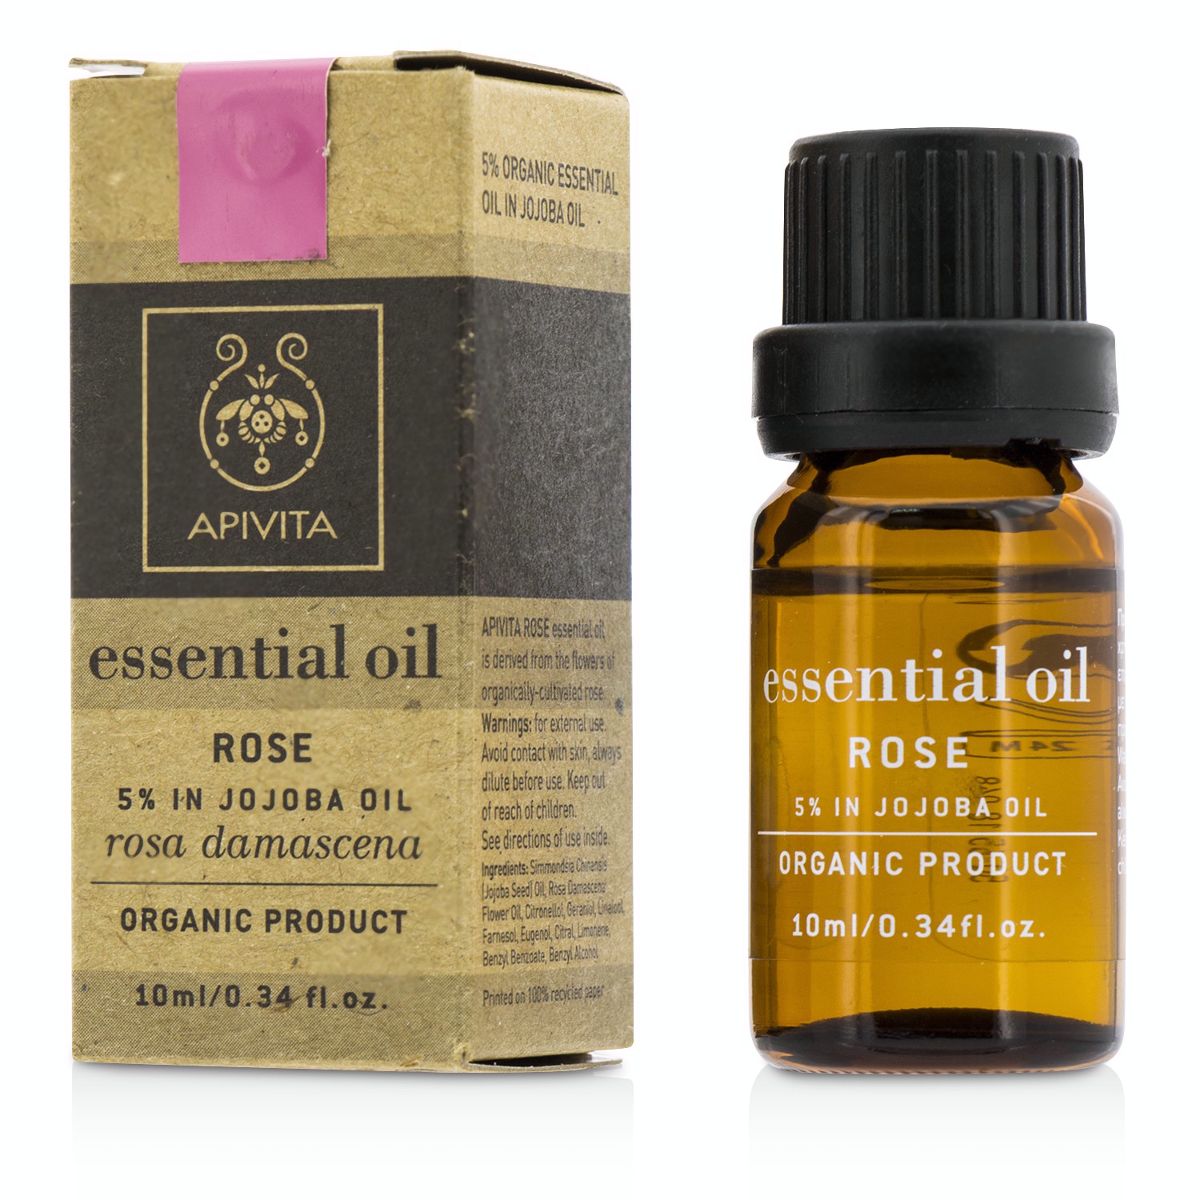 Essential Oil - Rose 5% In Jojoba Oil Apivita Image